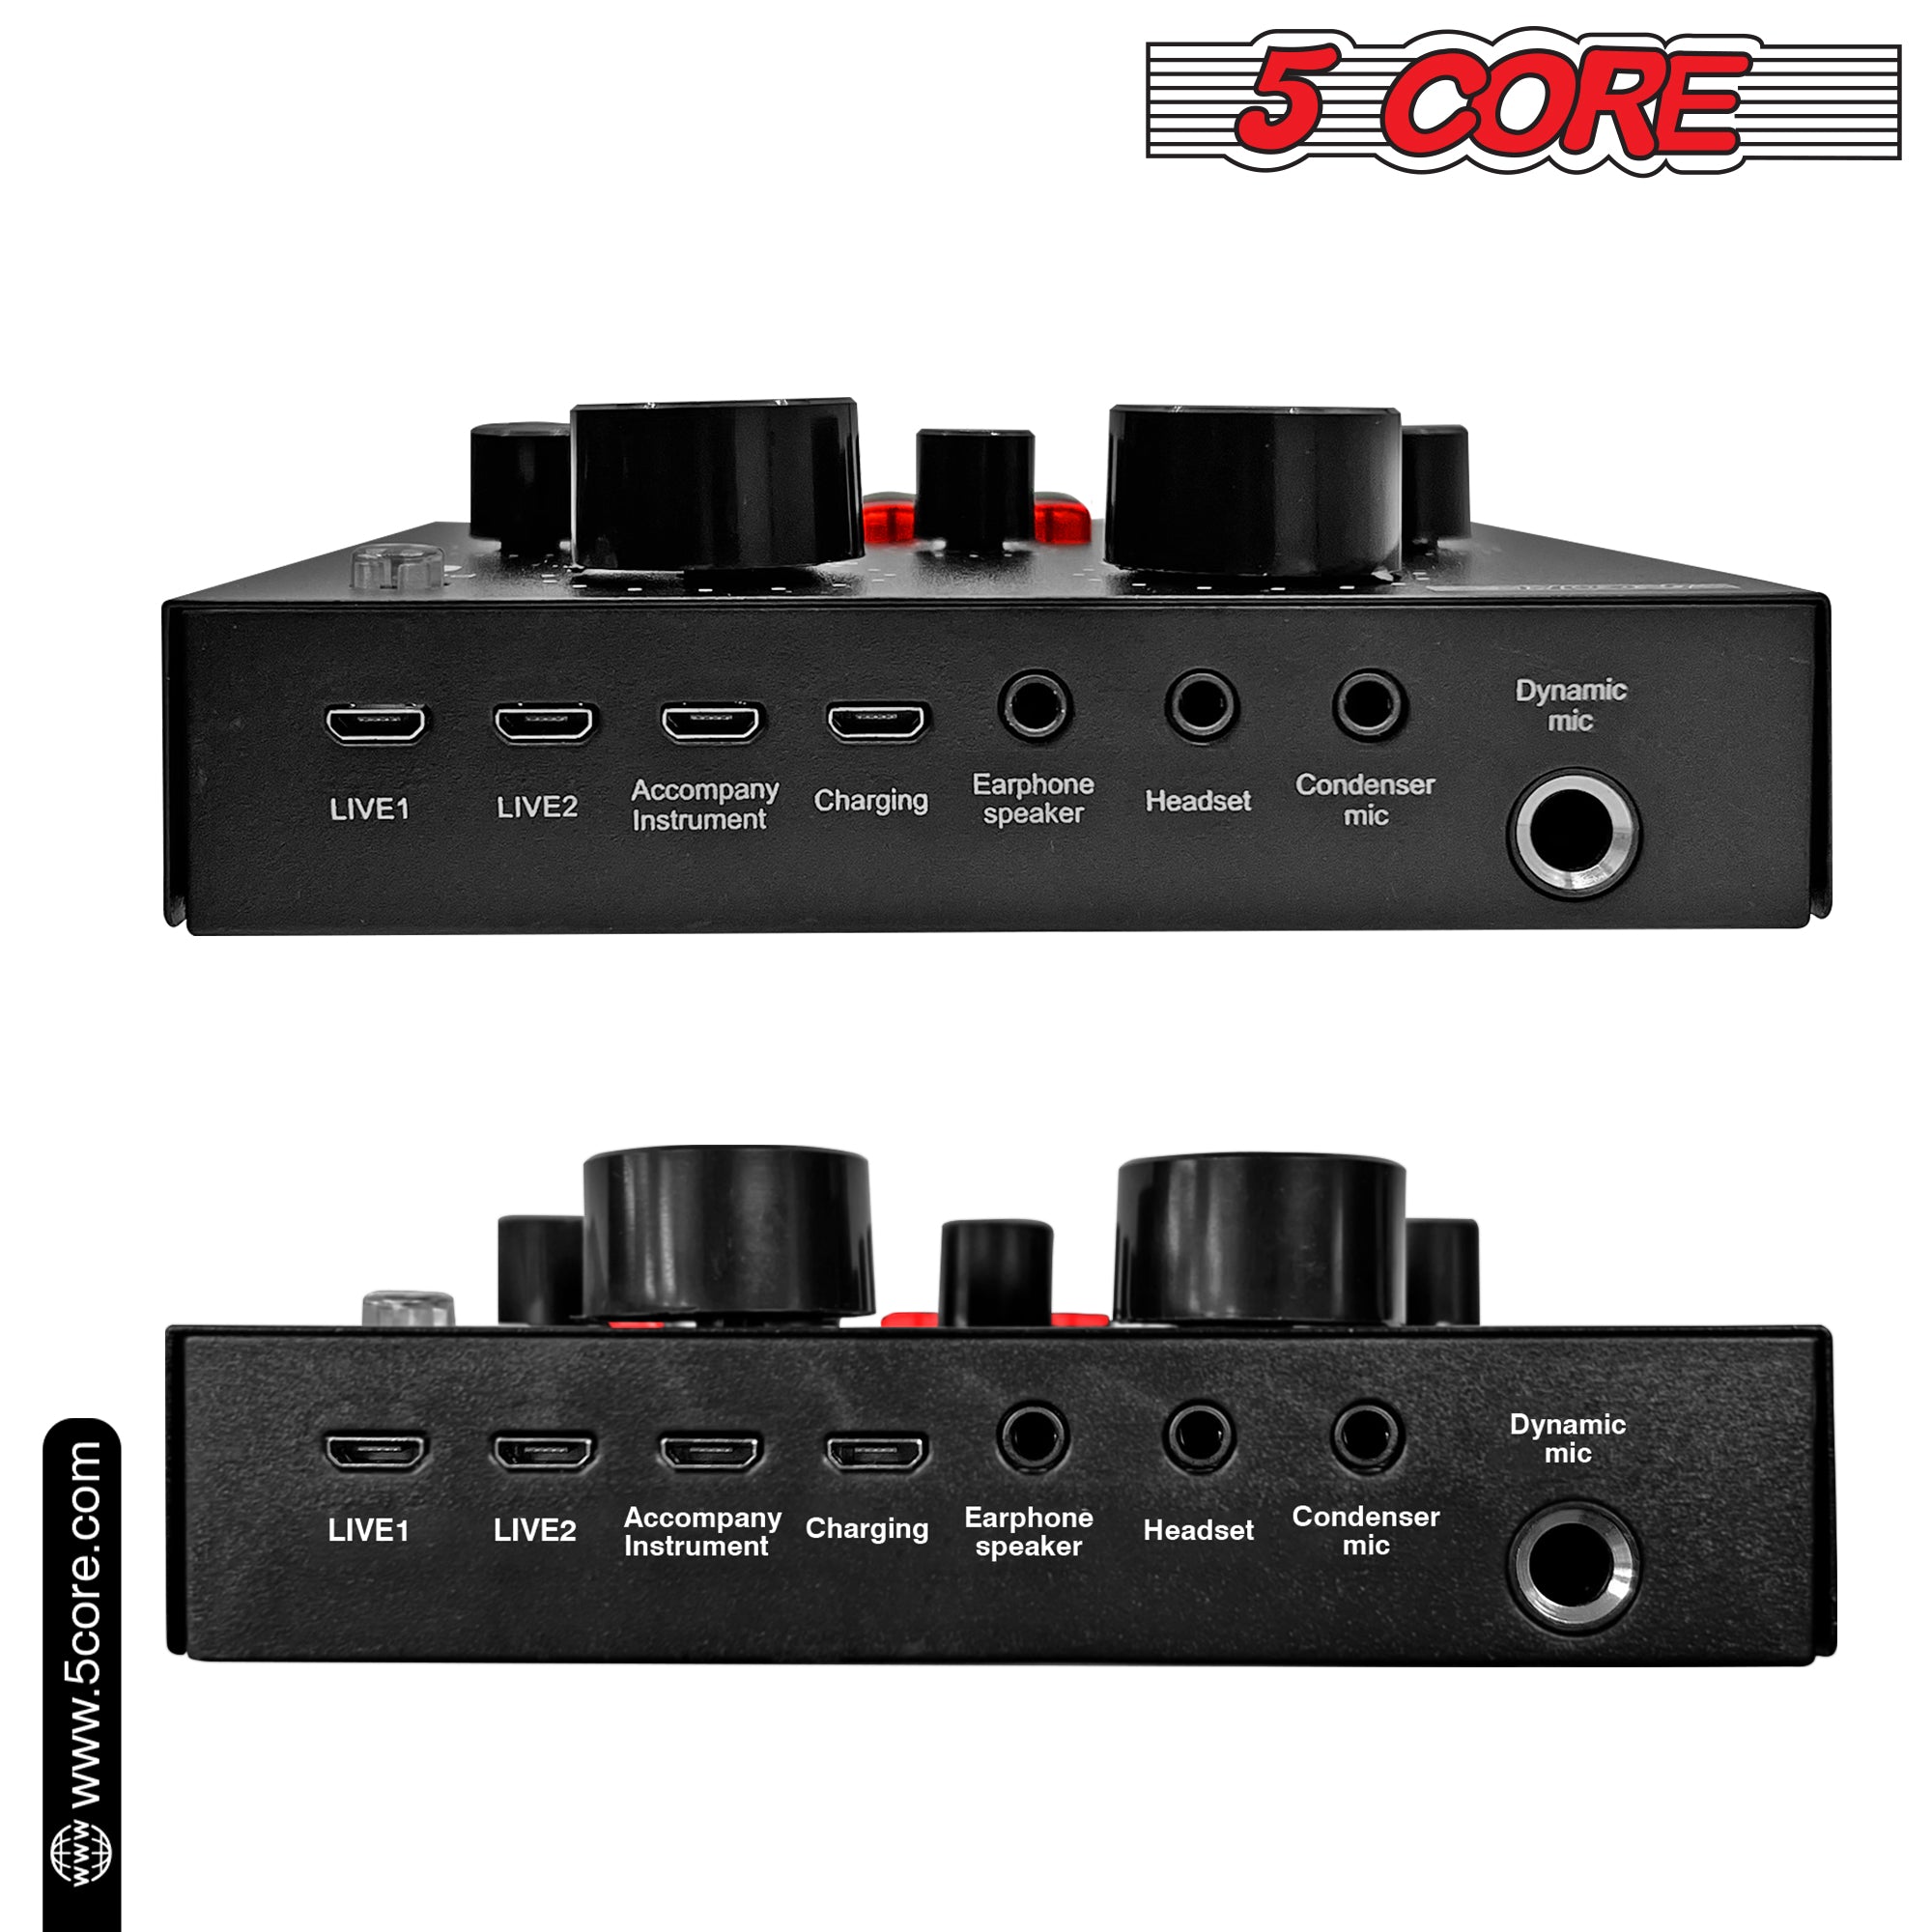 5 Core Studio Recording Kit Podcast Equipment Bundle w Live Sound Card Recording Microphone Desk Arm Shock Mount Sponge XLR Cable Mini Tripod -RM 8 BG